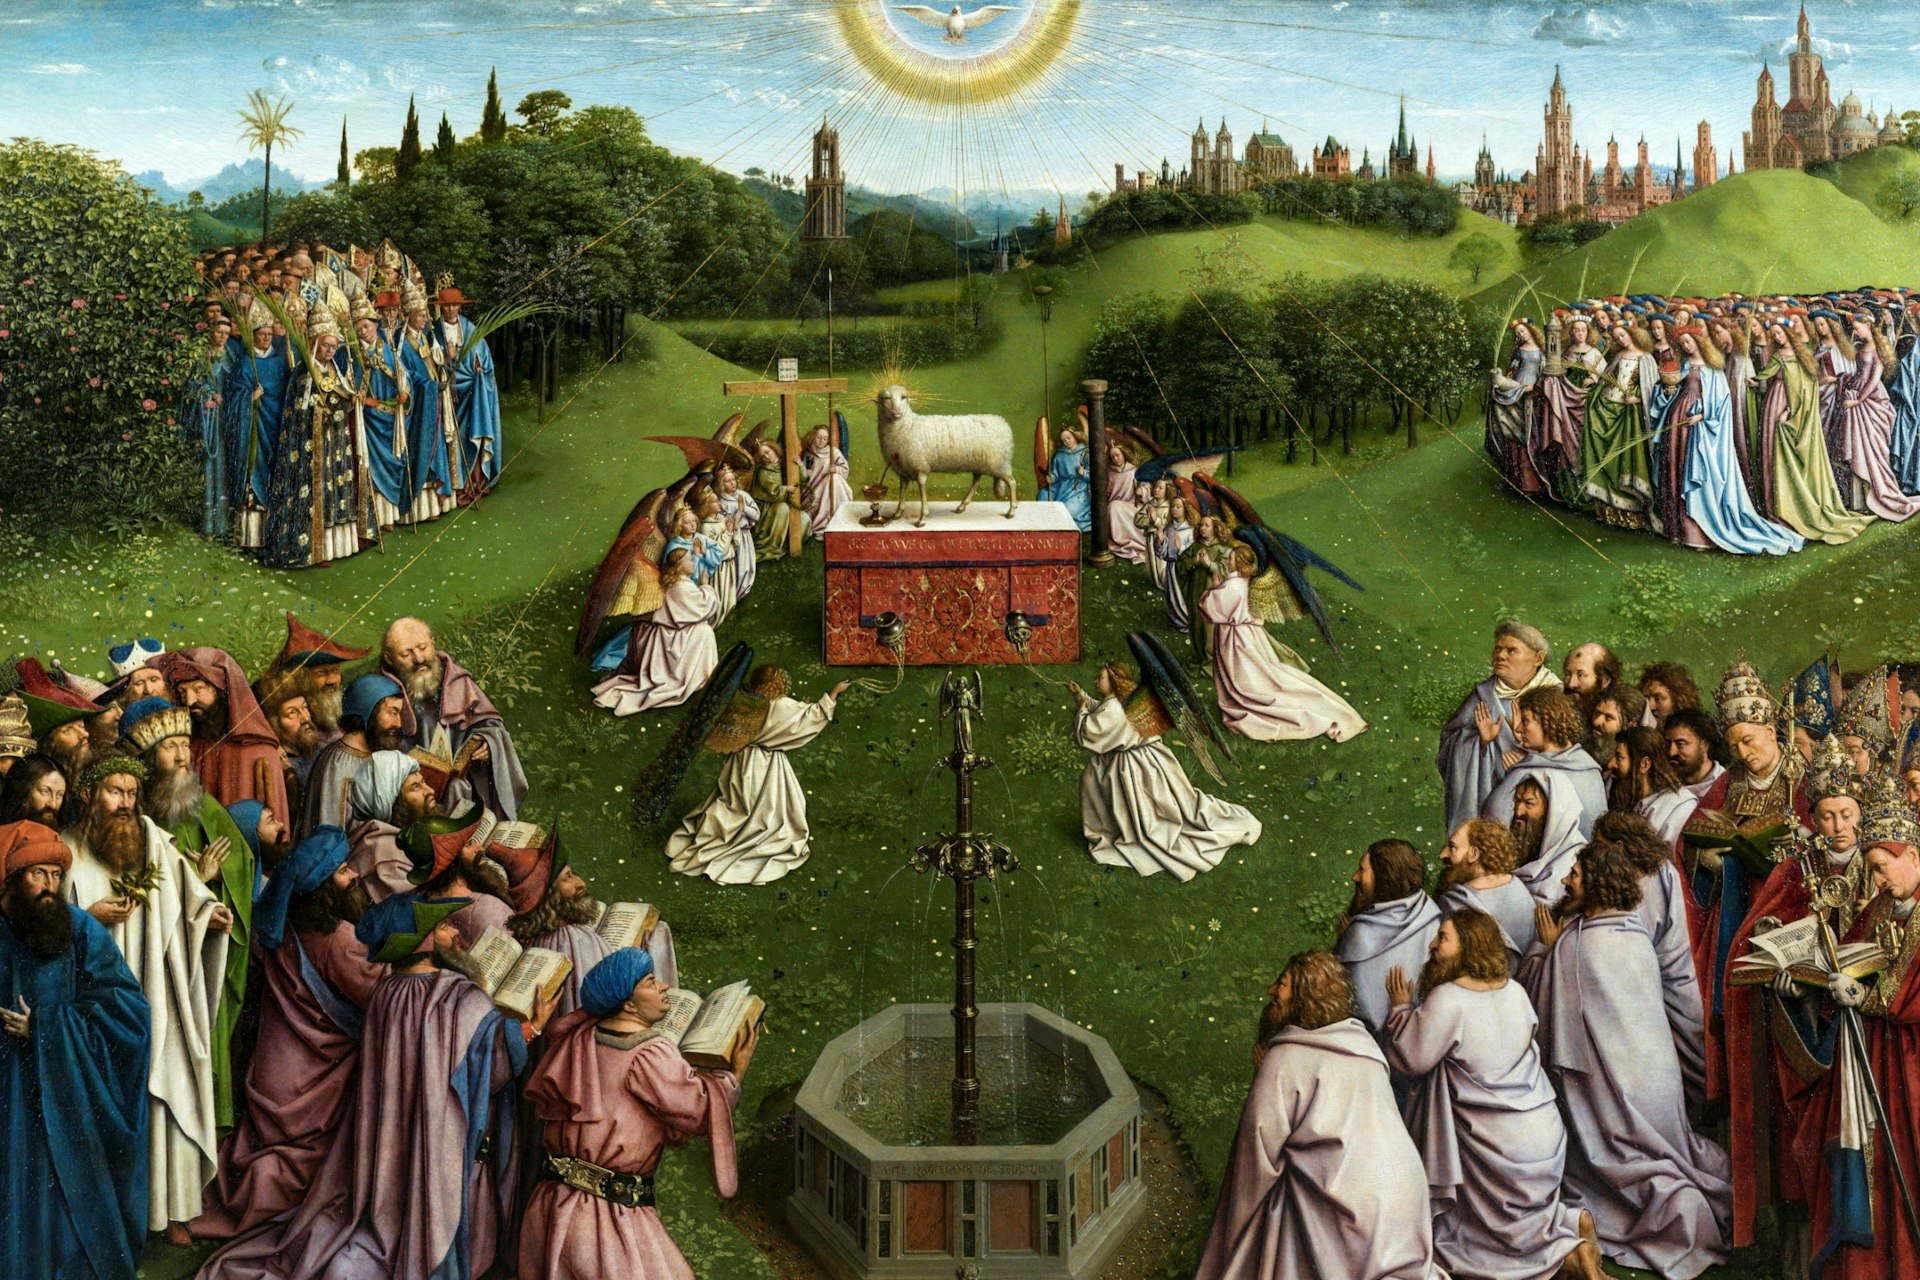 The restored original of 'Adoration of the Mystic Lamb' altarpiece (1432)